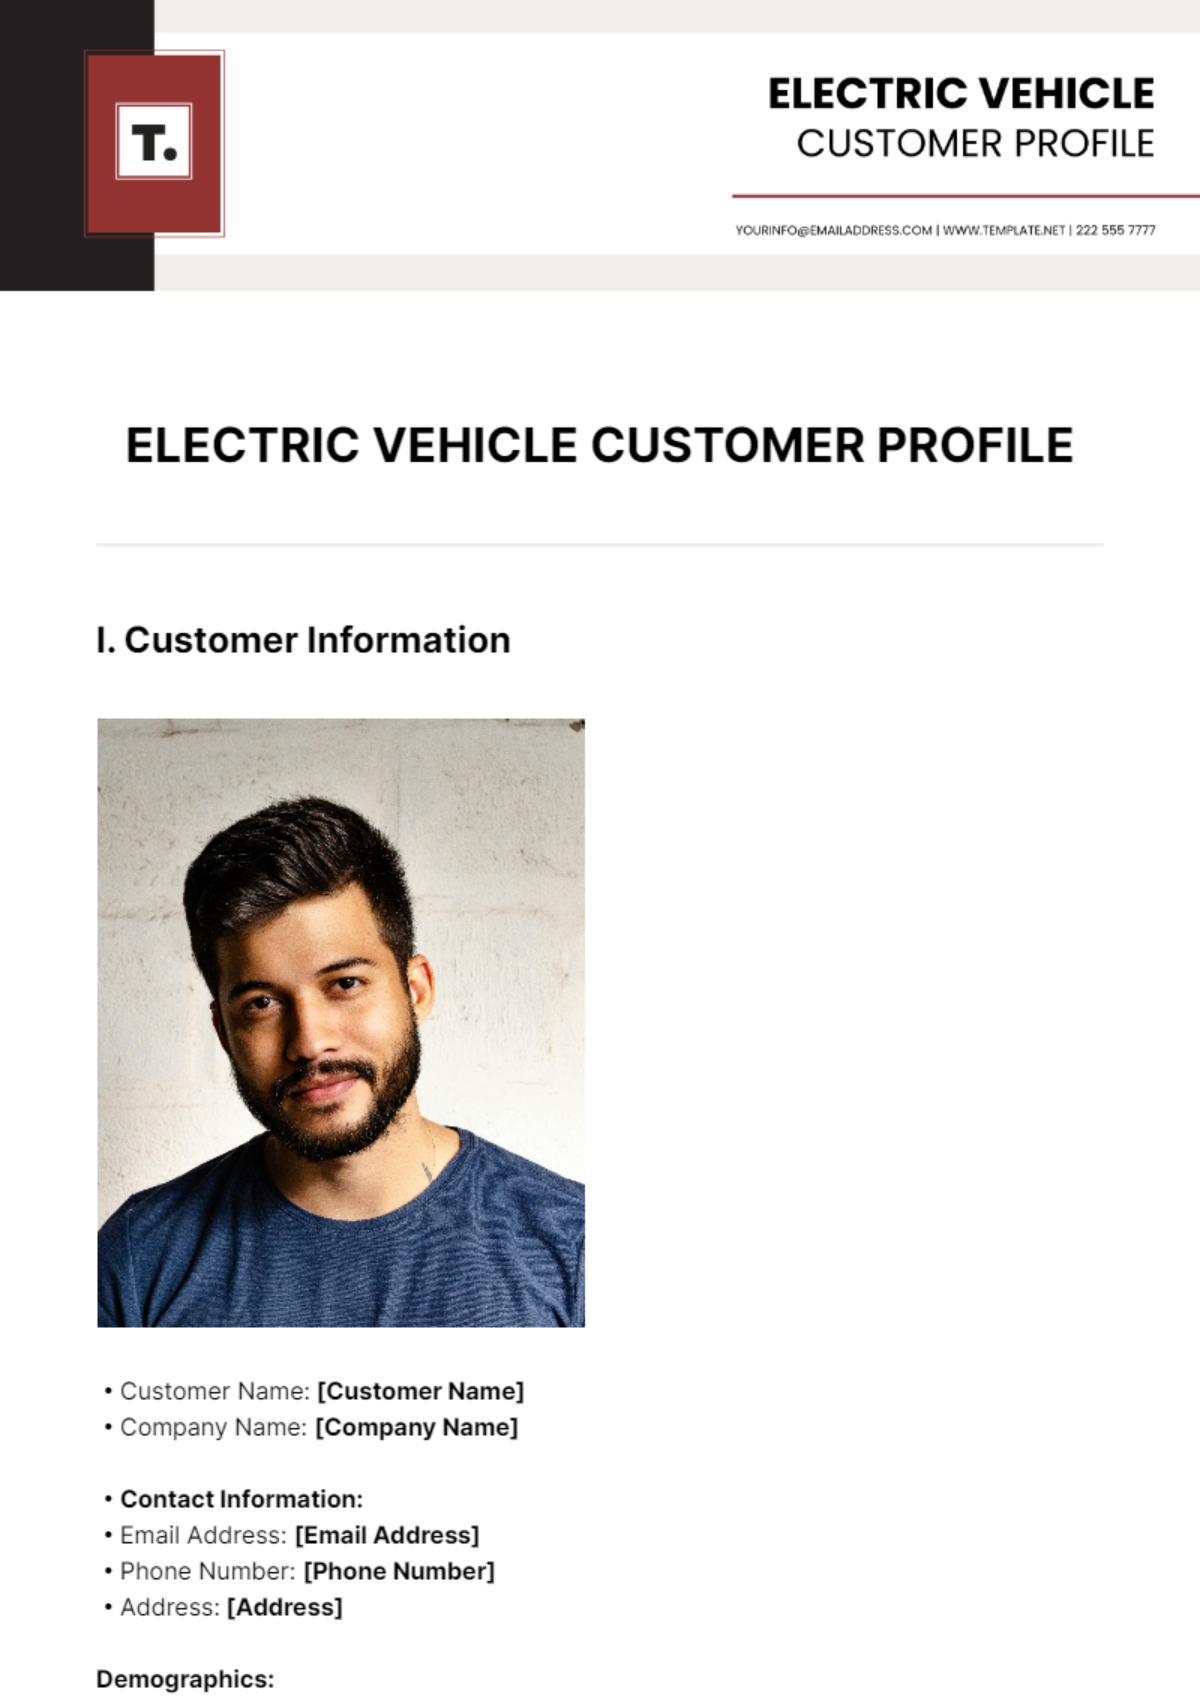 Electric Vehicle Customer Profile Template